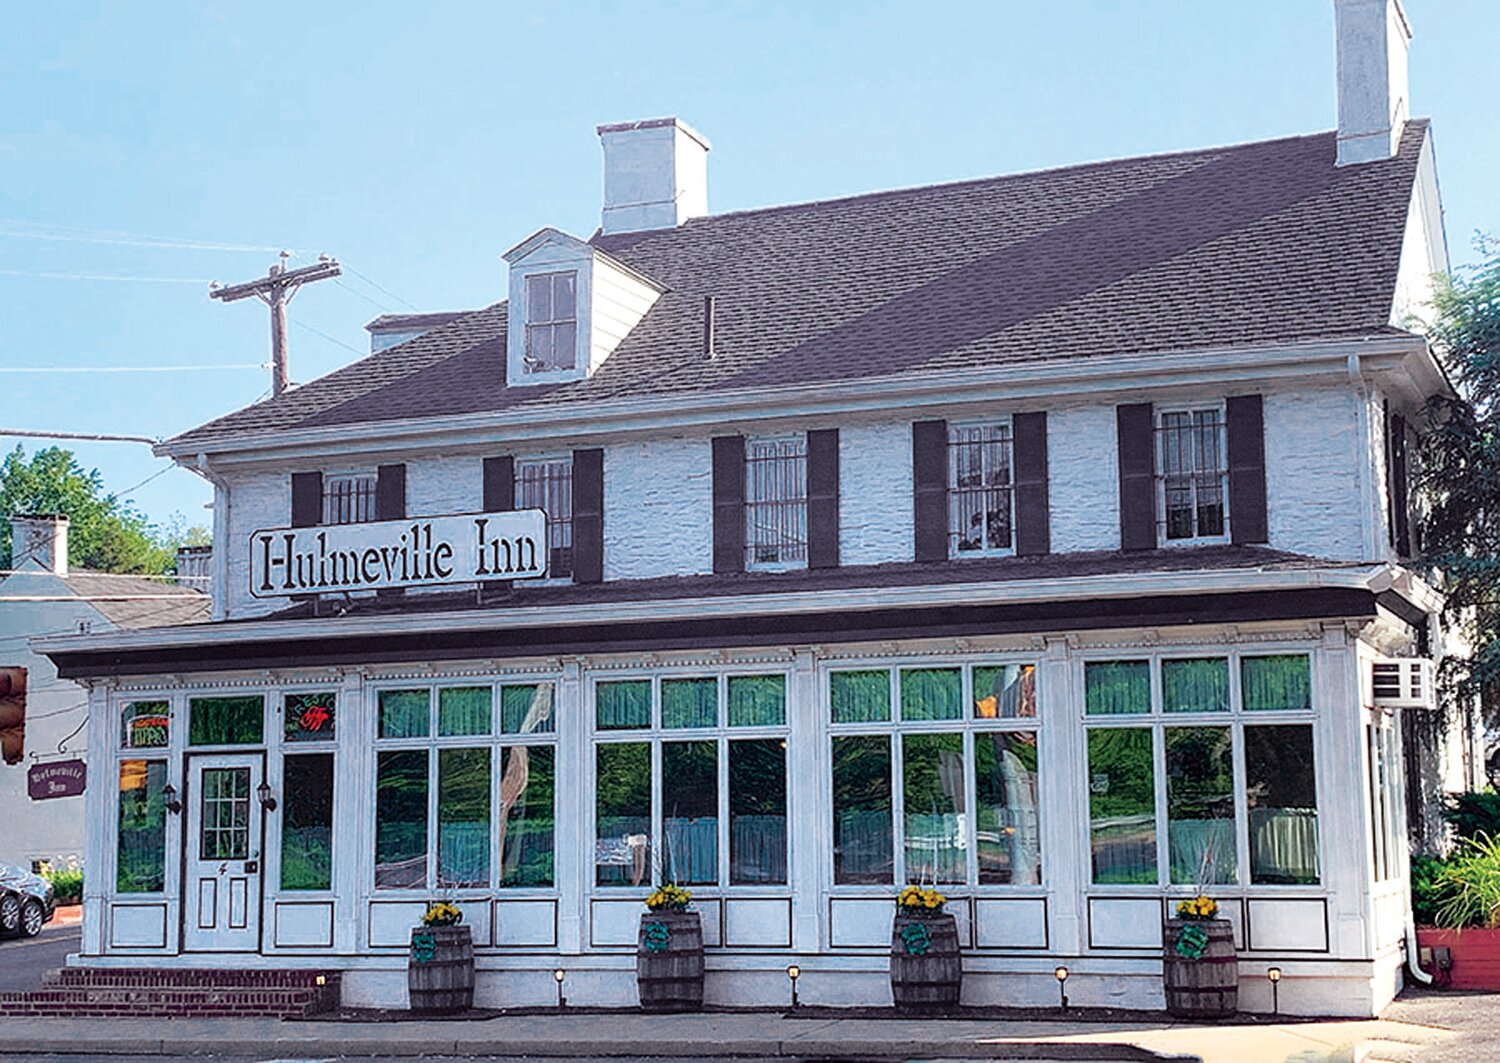 Hulmeville Inn sits at 4 Trenton Road in Hulmeville.